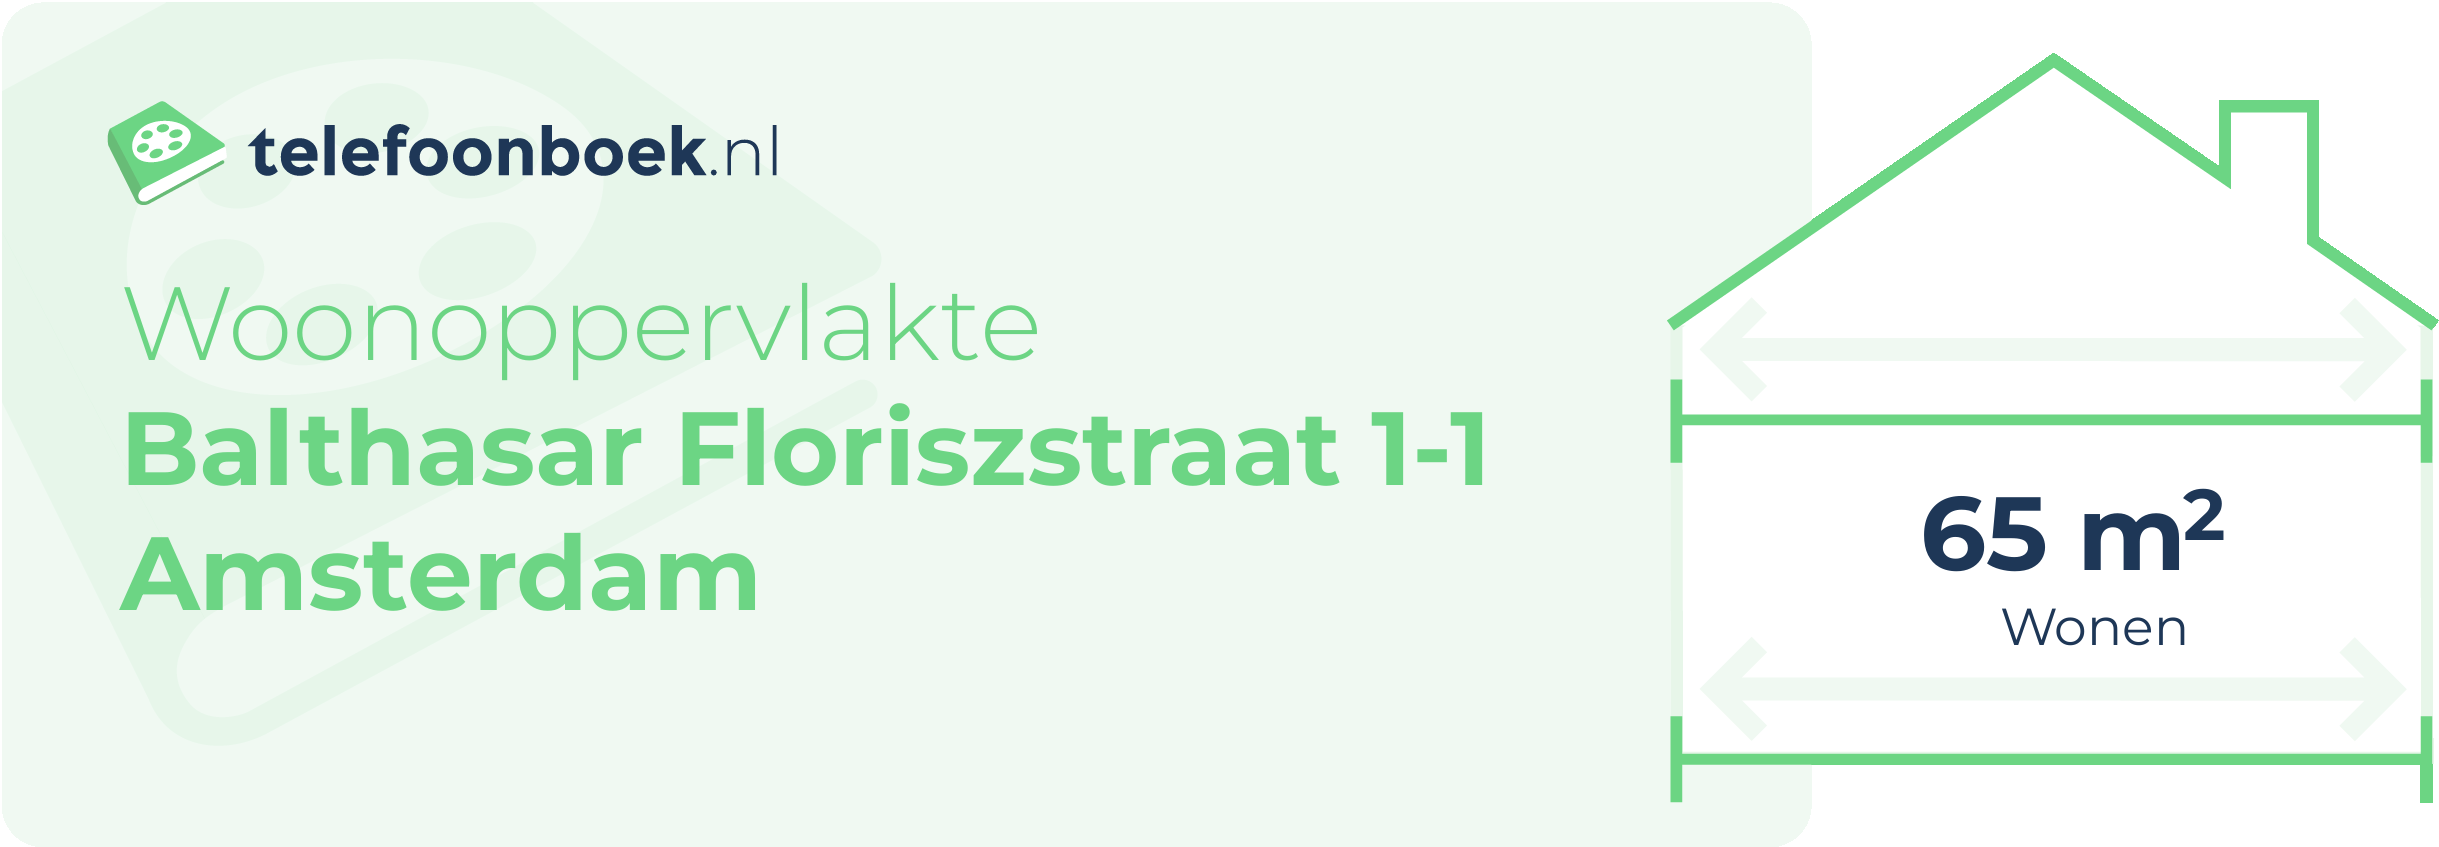 Woonoppervlakte Balthasar Floriszstraat 1-1 Amsterdam